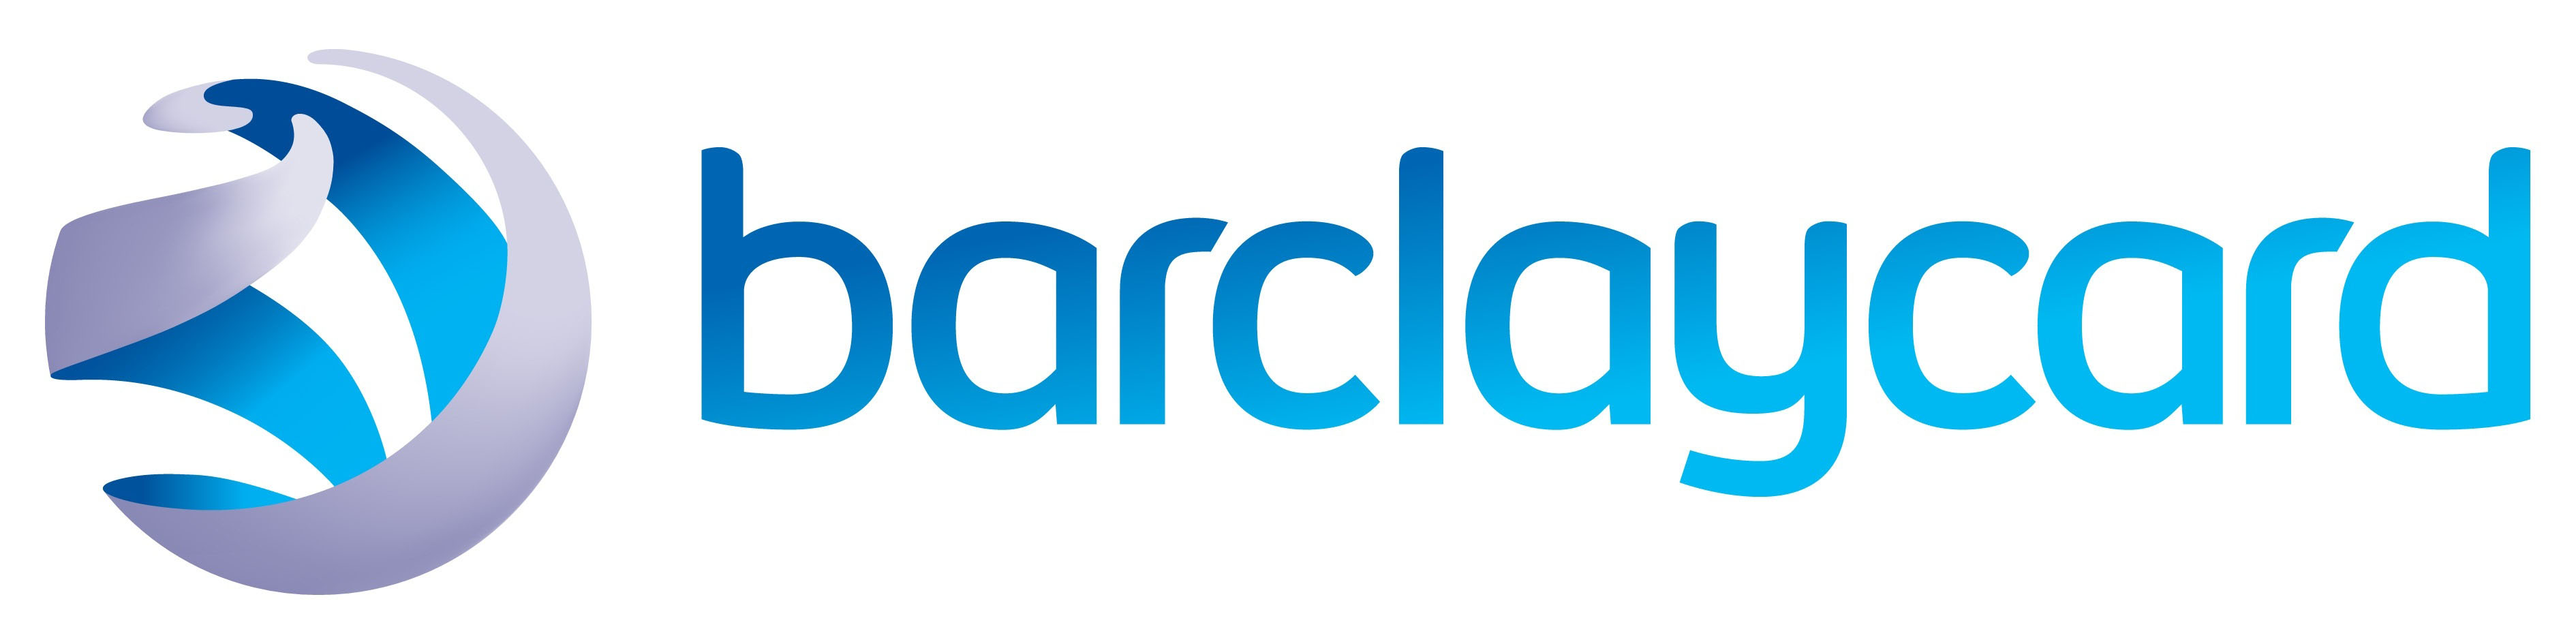 Barclaycard Brand Logo